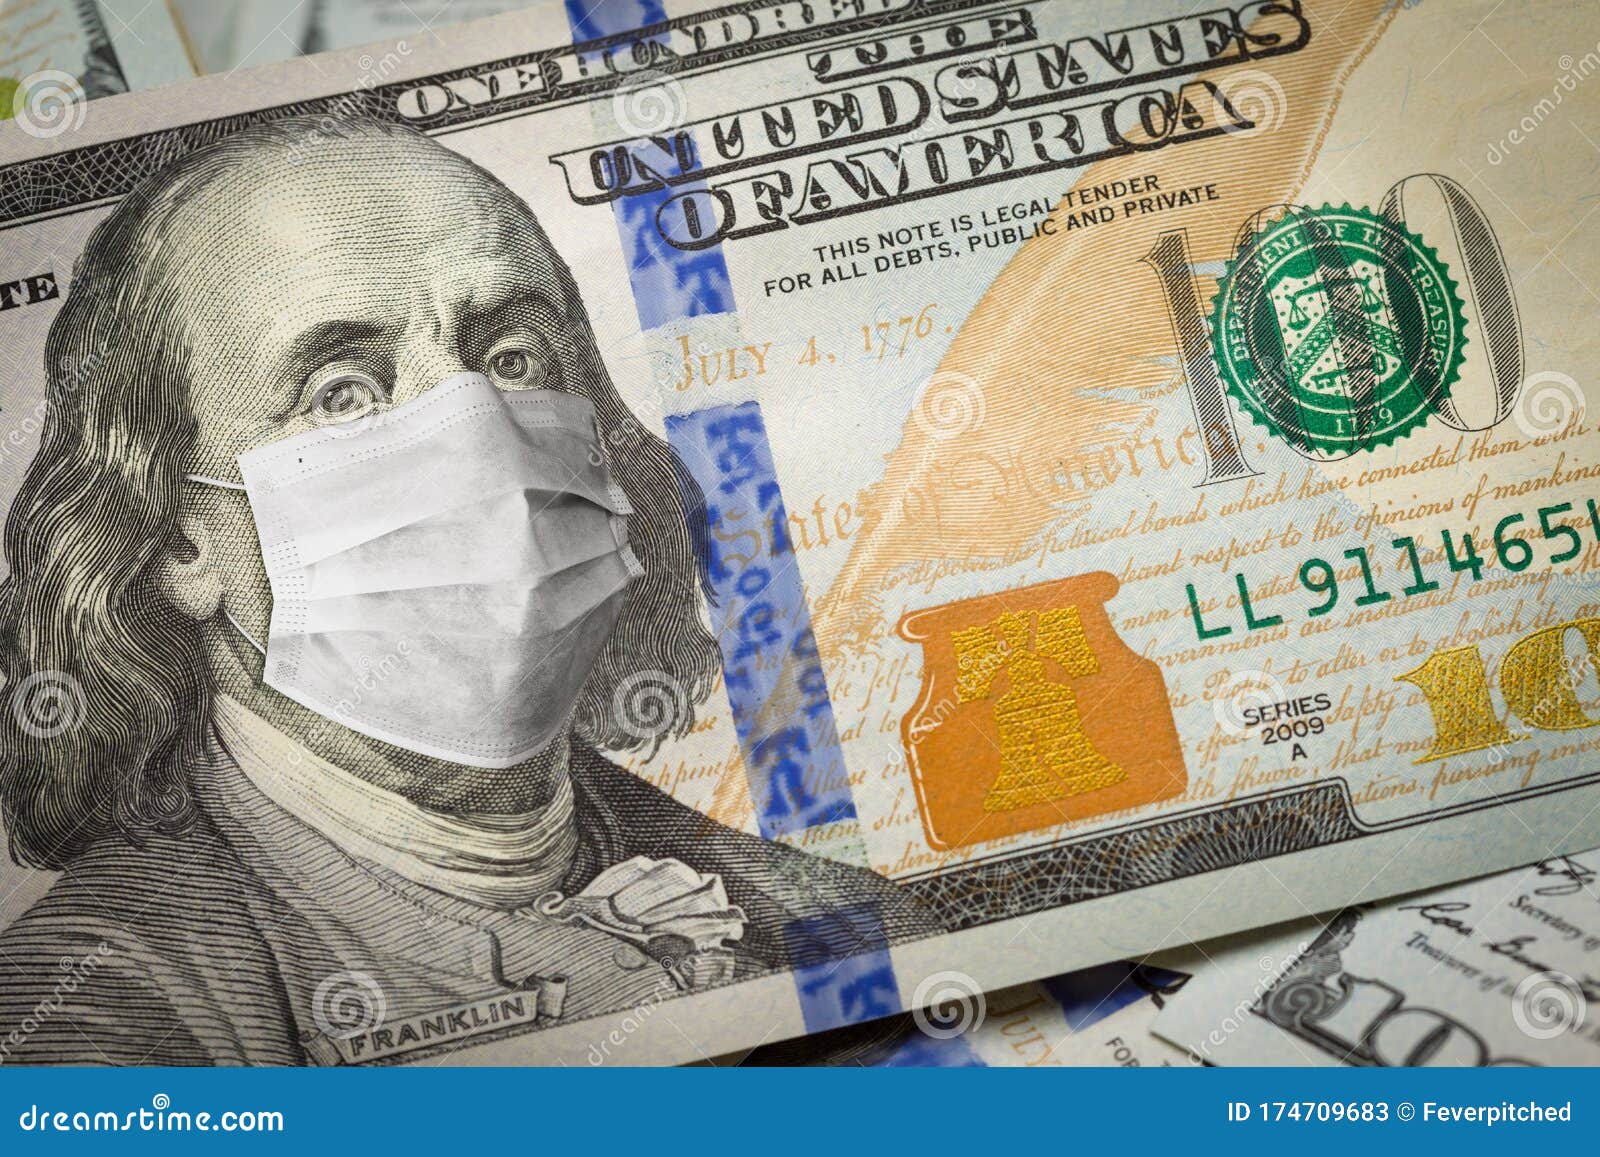 one hundred dollar bill with medical face mask on benjamin franklin